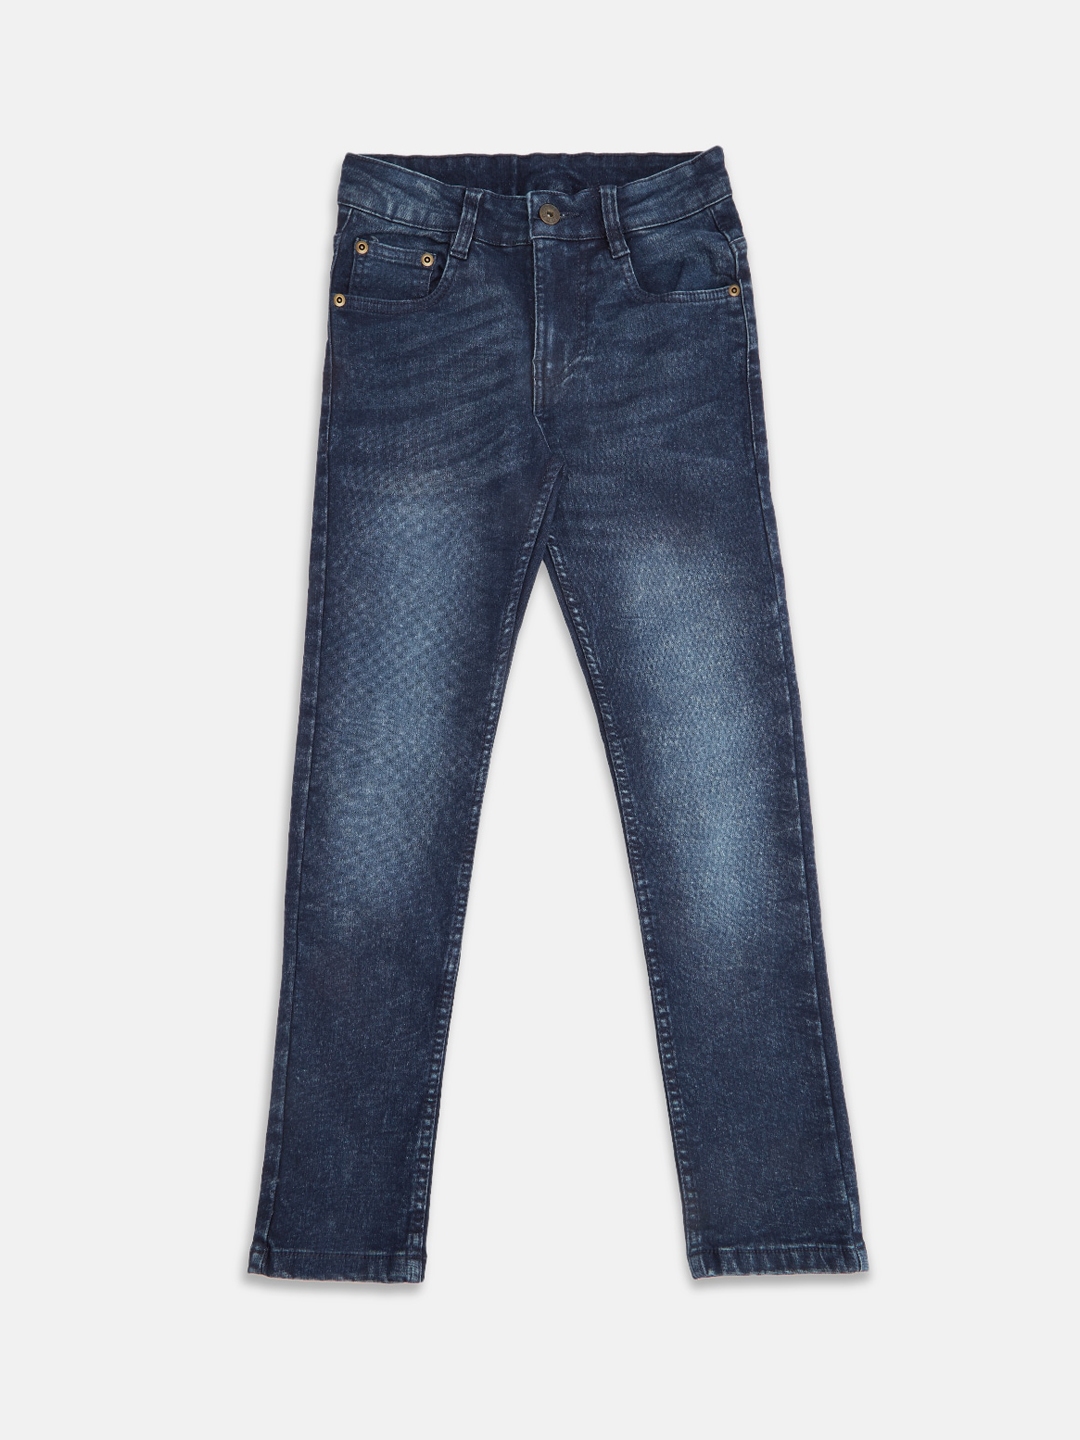 Pantaloons Junior Boys Slim Fit Casual Blue Jeans - Selling Fast